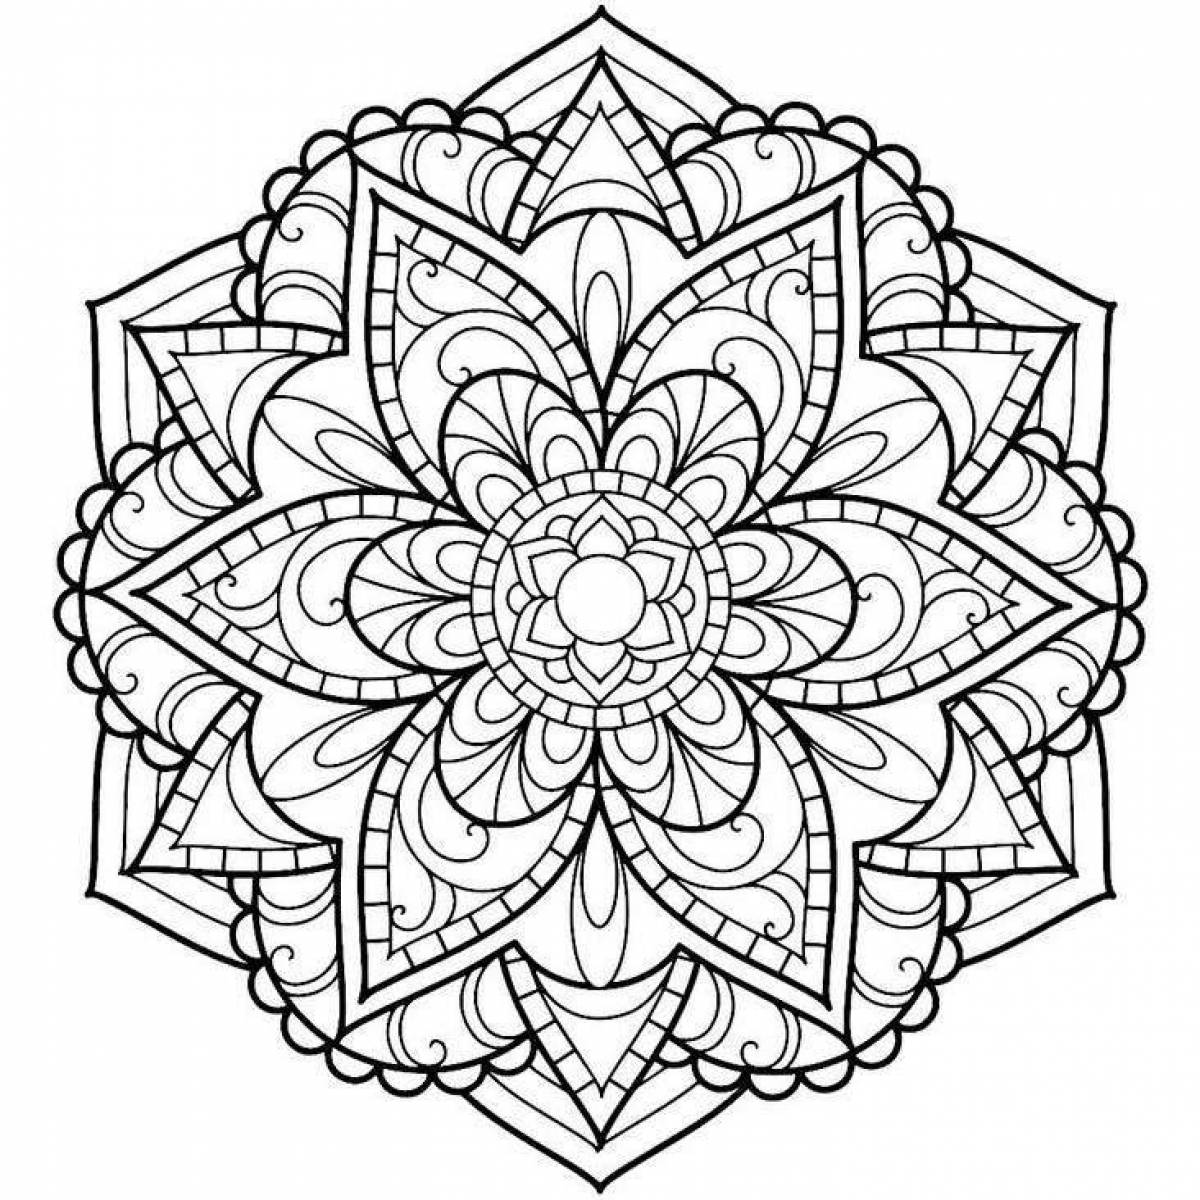 Splendid coloring page video meditative mandala antistress